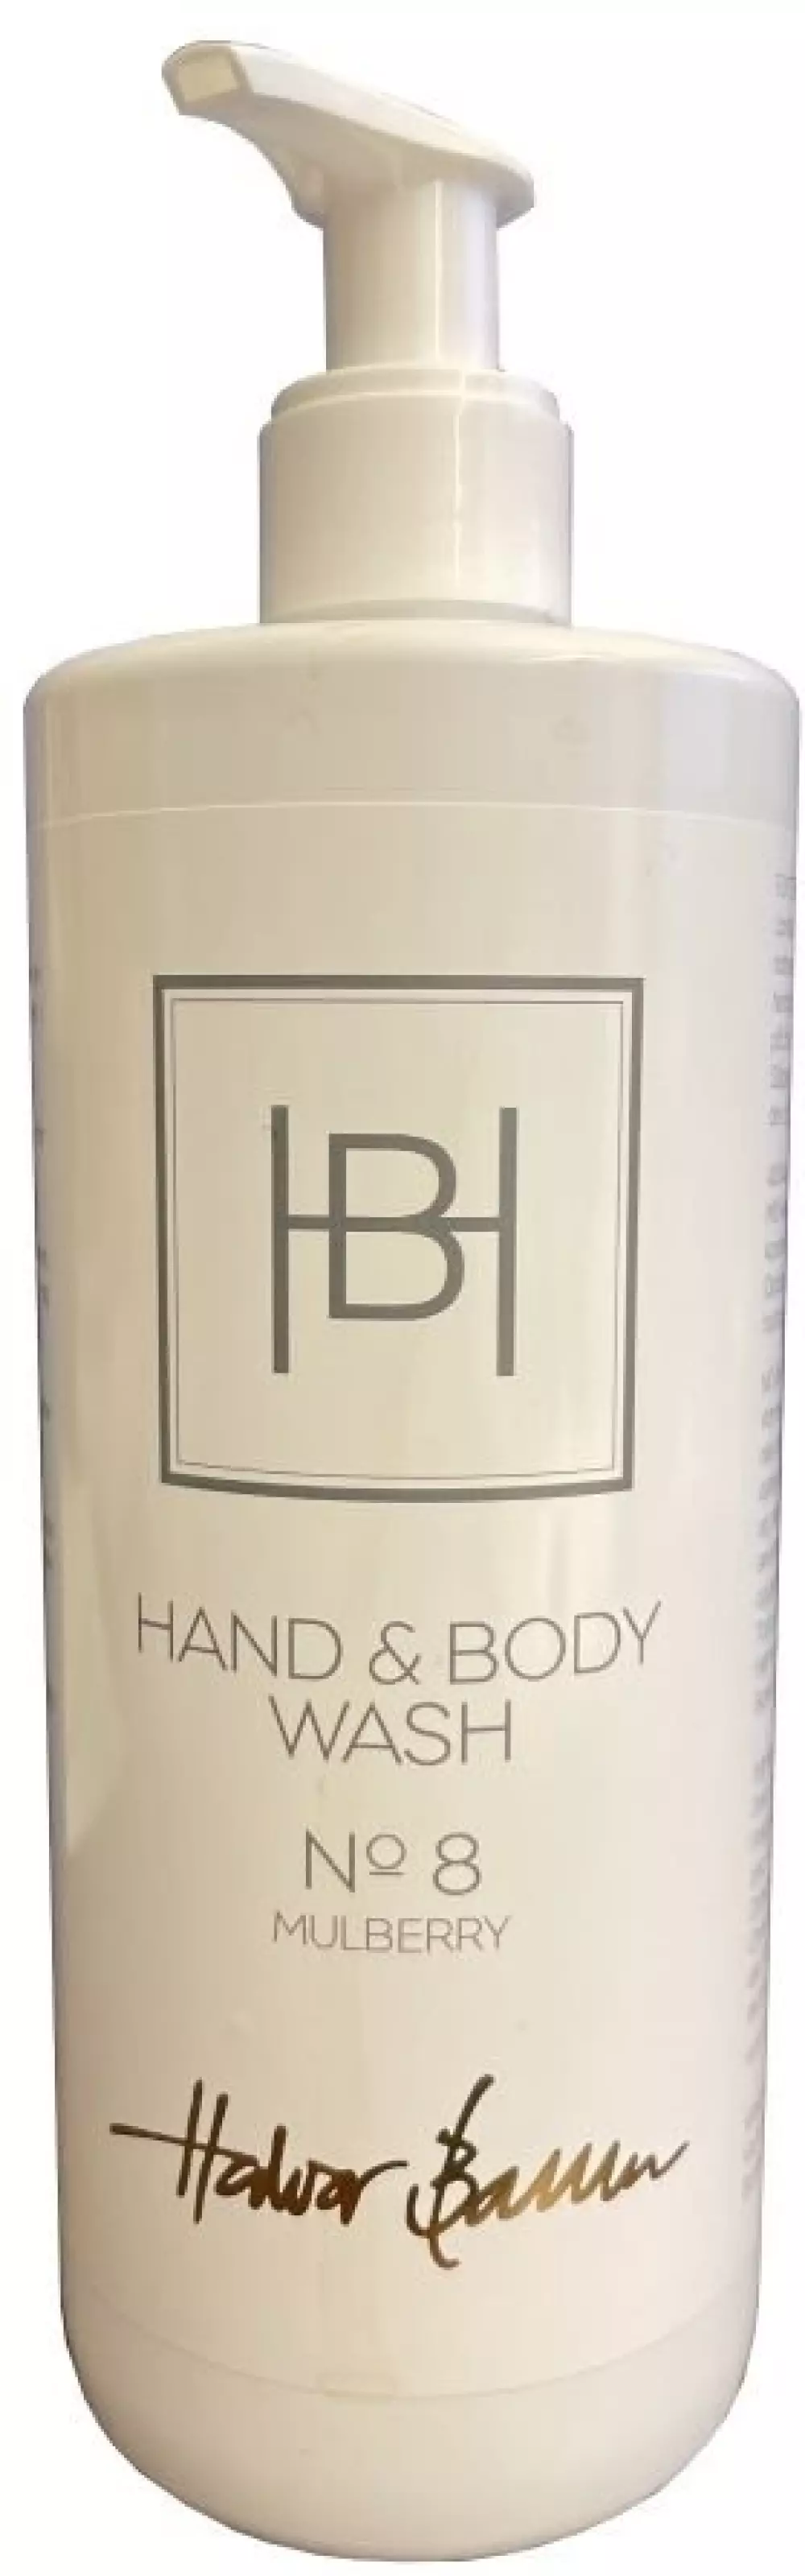 Hand & Bodywash Mulberry 500ml, 0789011483988, HB800, Baderom, Håndsåper, Halvor Bakke, Terrigeno, Hand & Bodywash NO8 MULBERRY